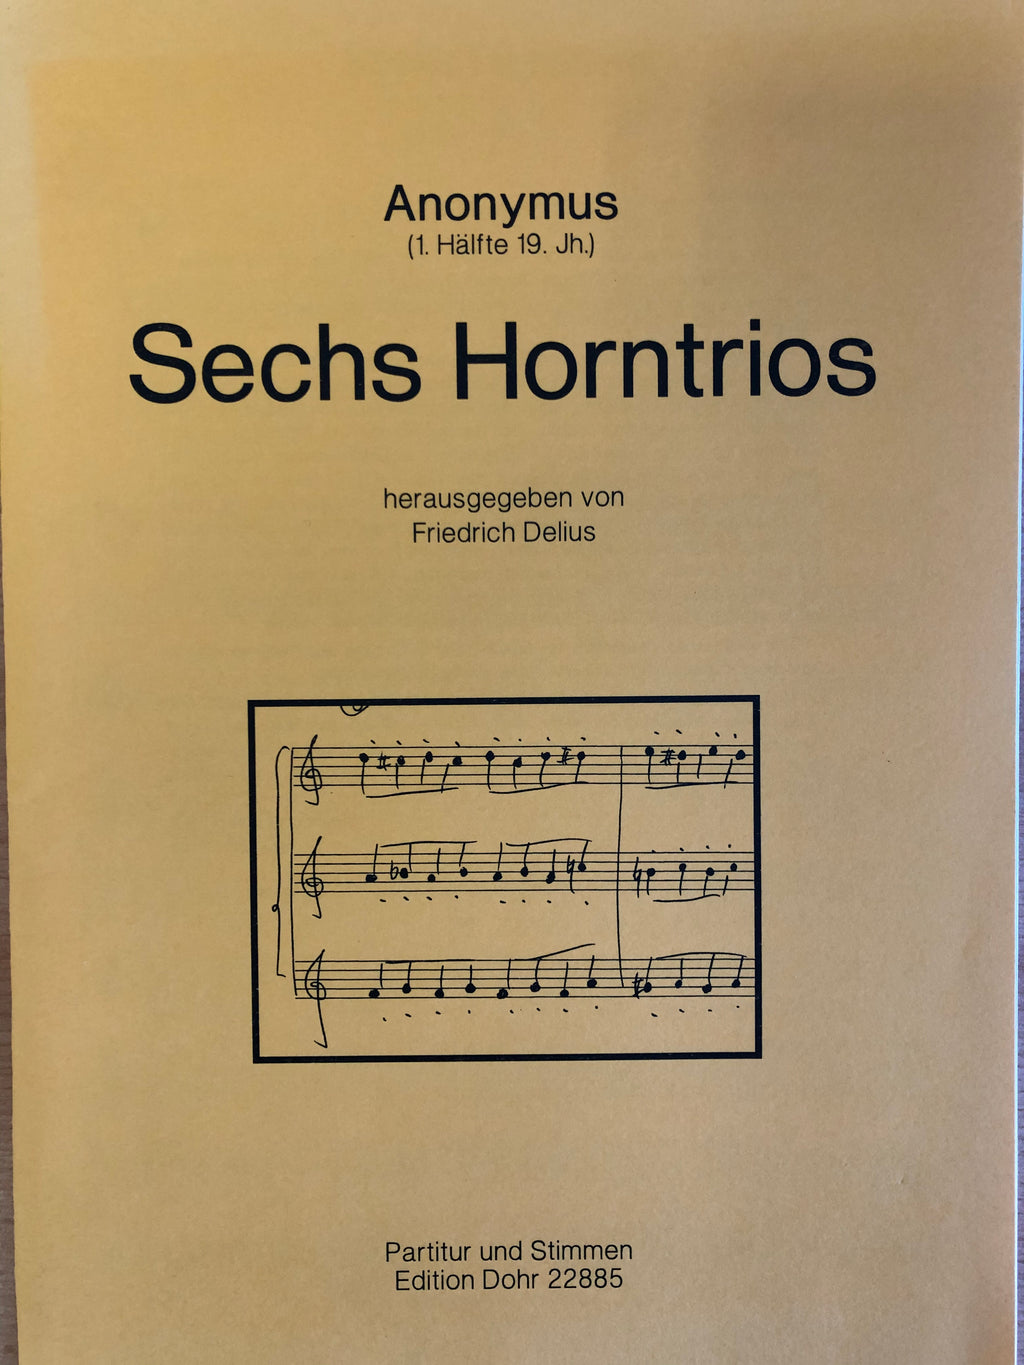 Sechs Horntrios for 3 horns, Delius - Scattando Verkleedhuis